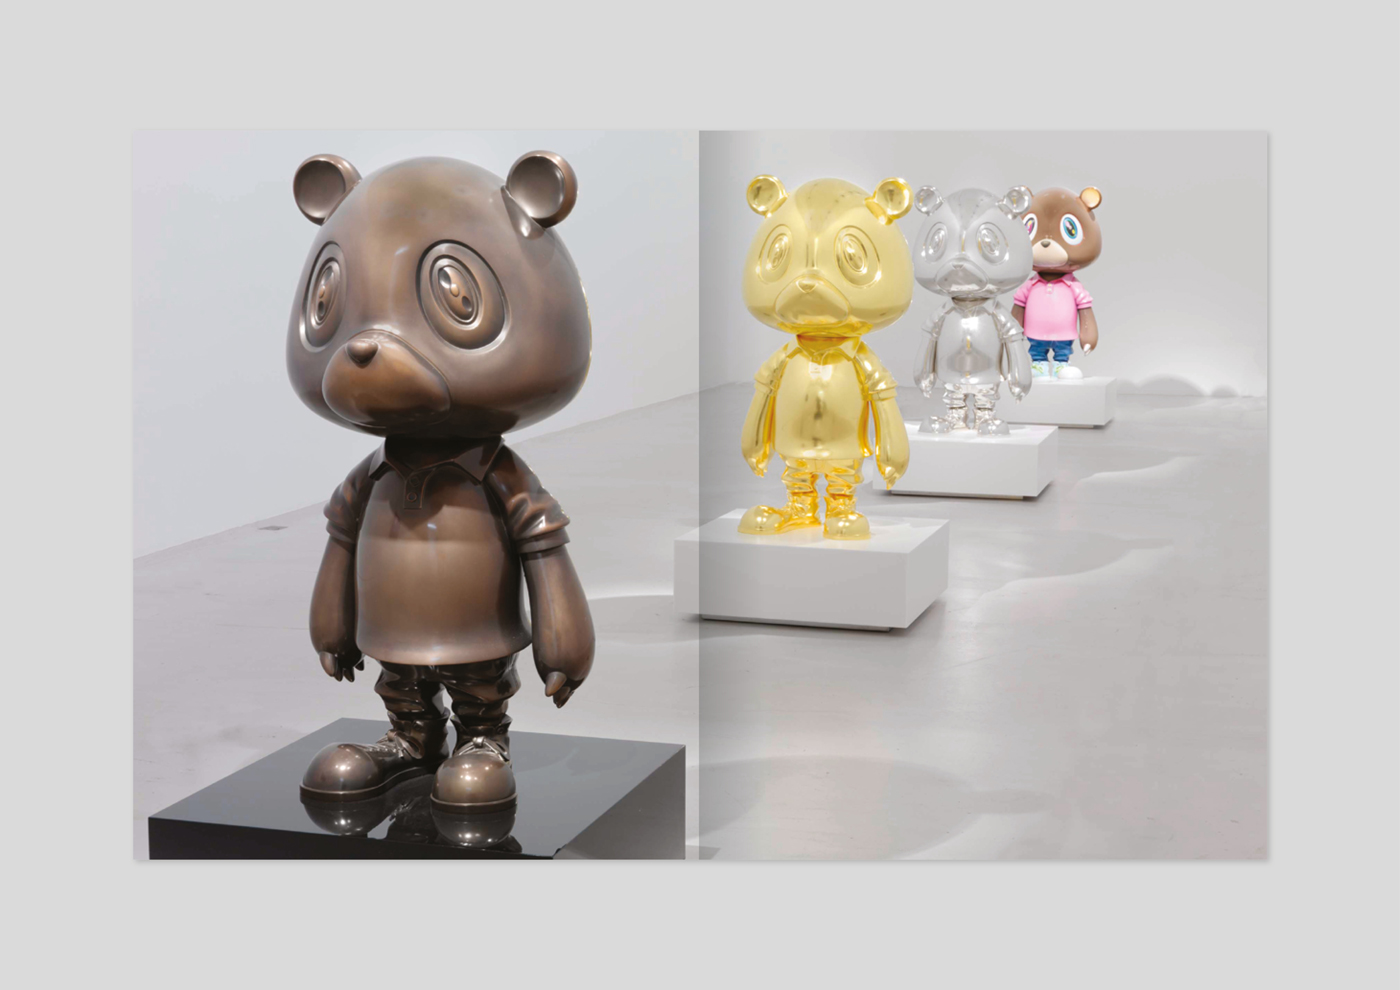 Takashi Murakami – Exhibition catalogue